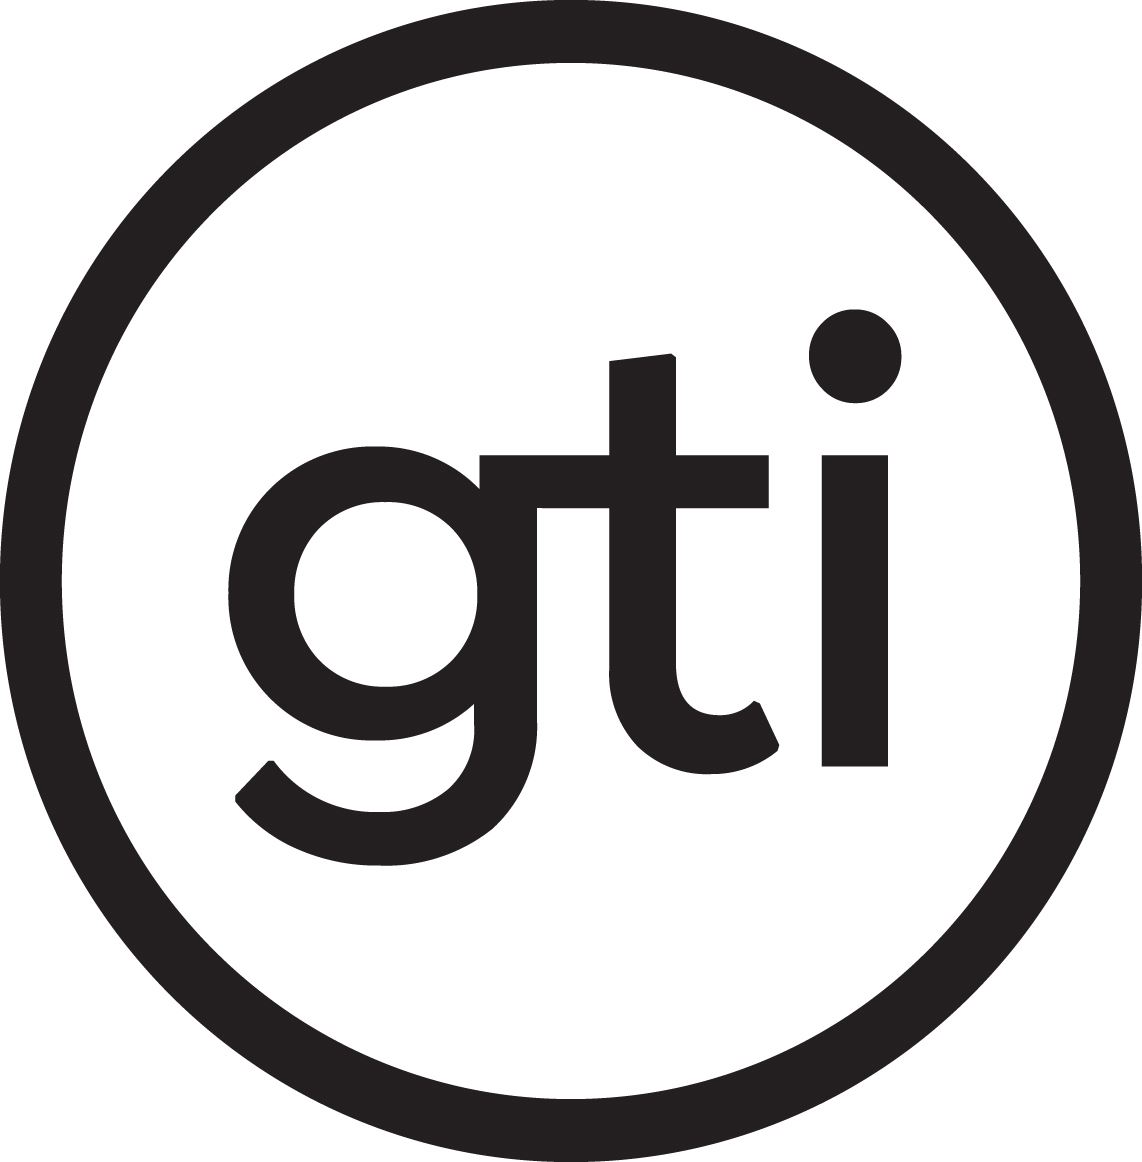 Group GTI (opens in a new window)